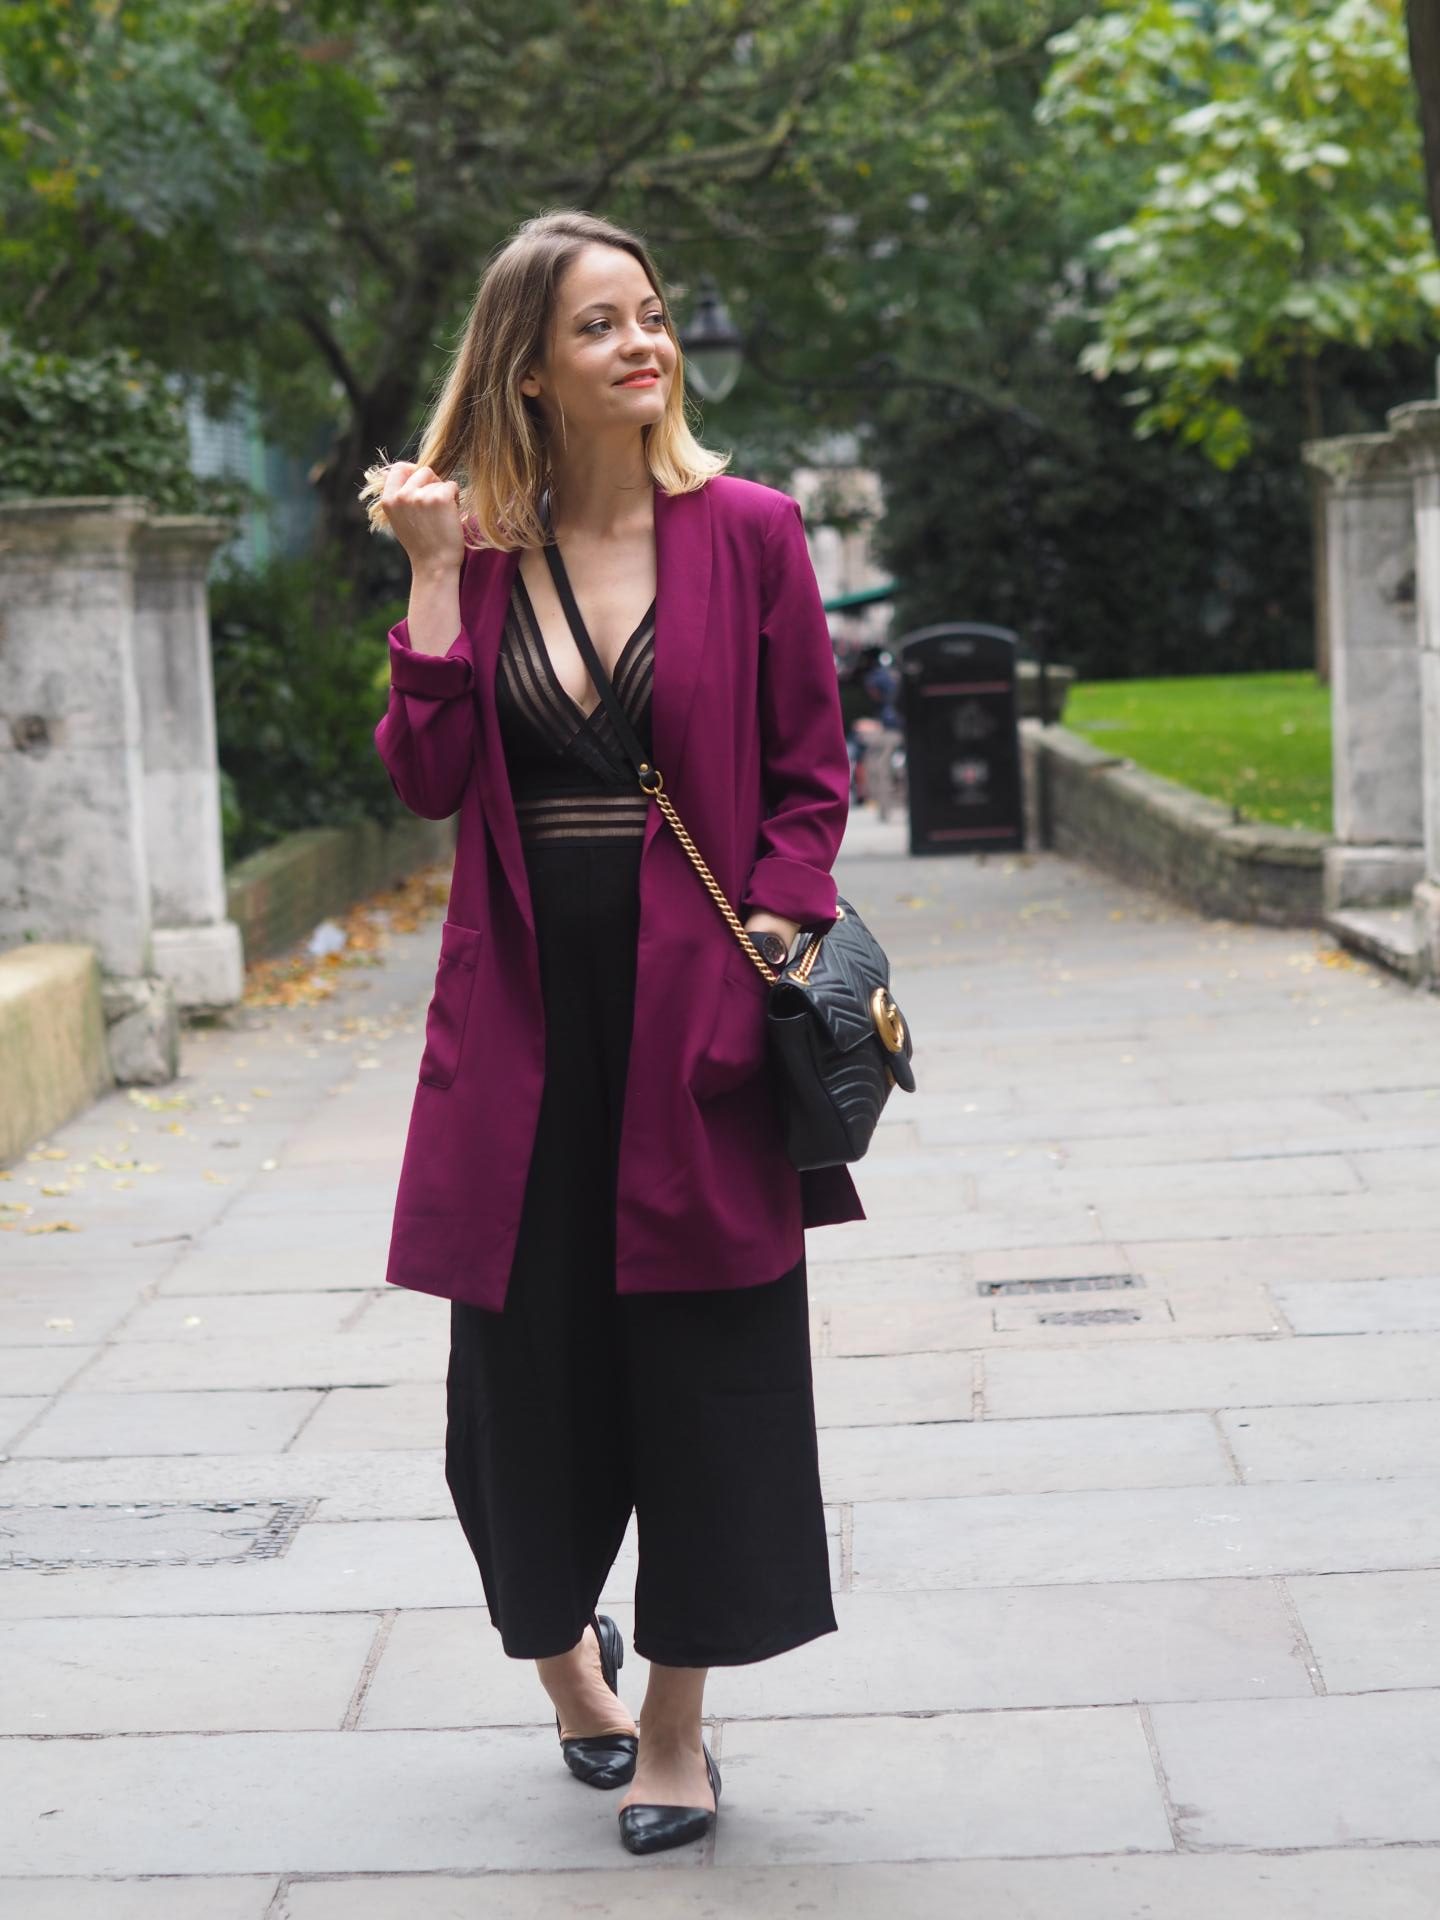 London fashion bloggers